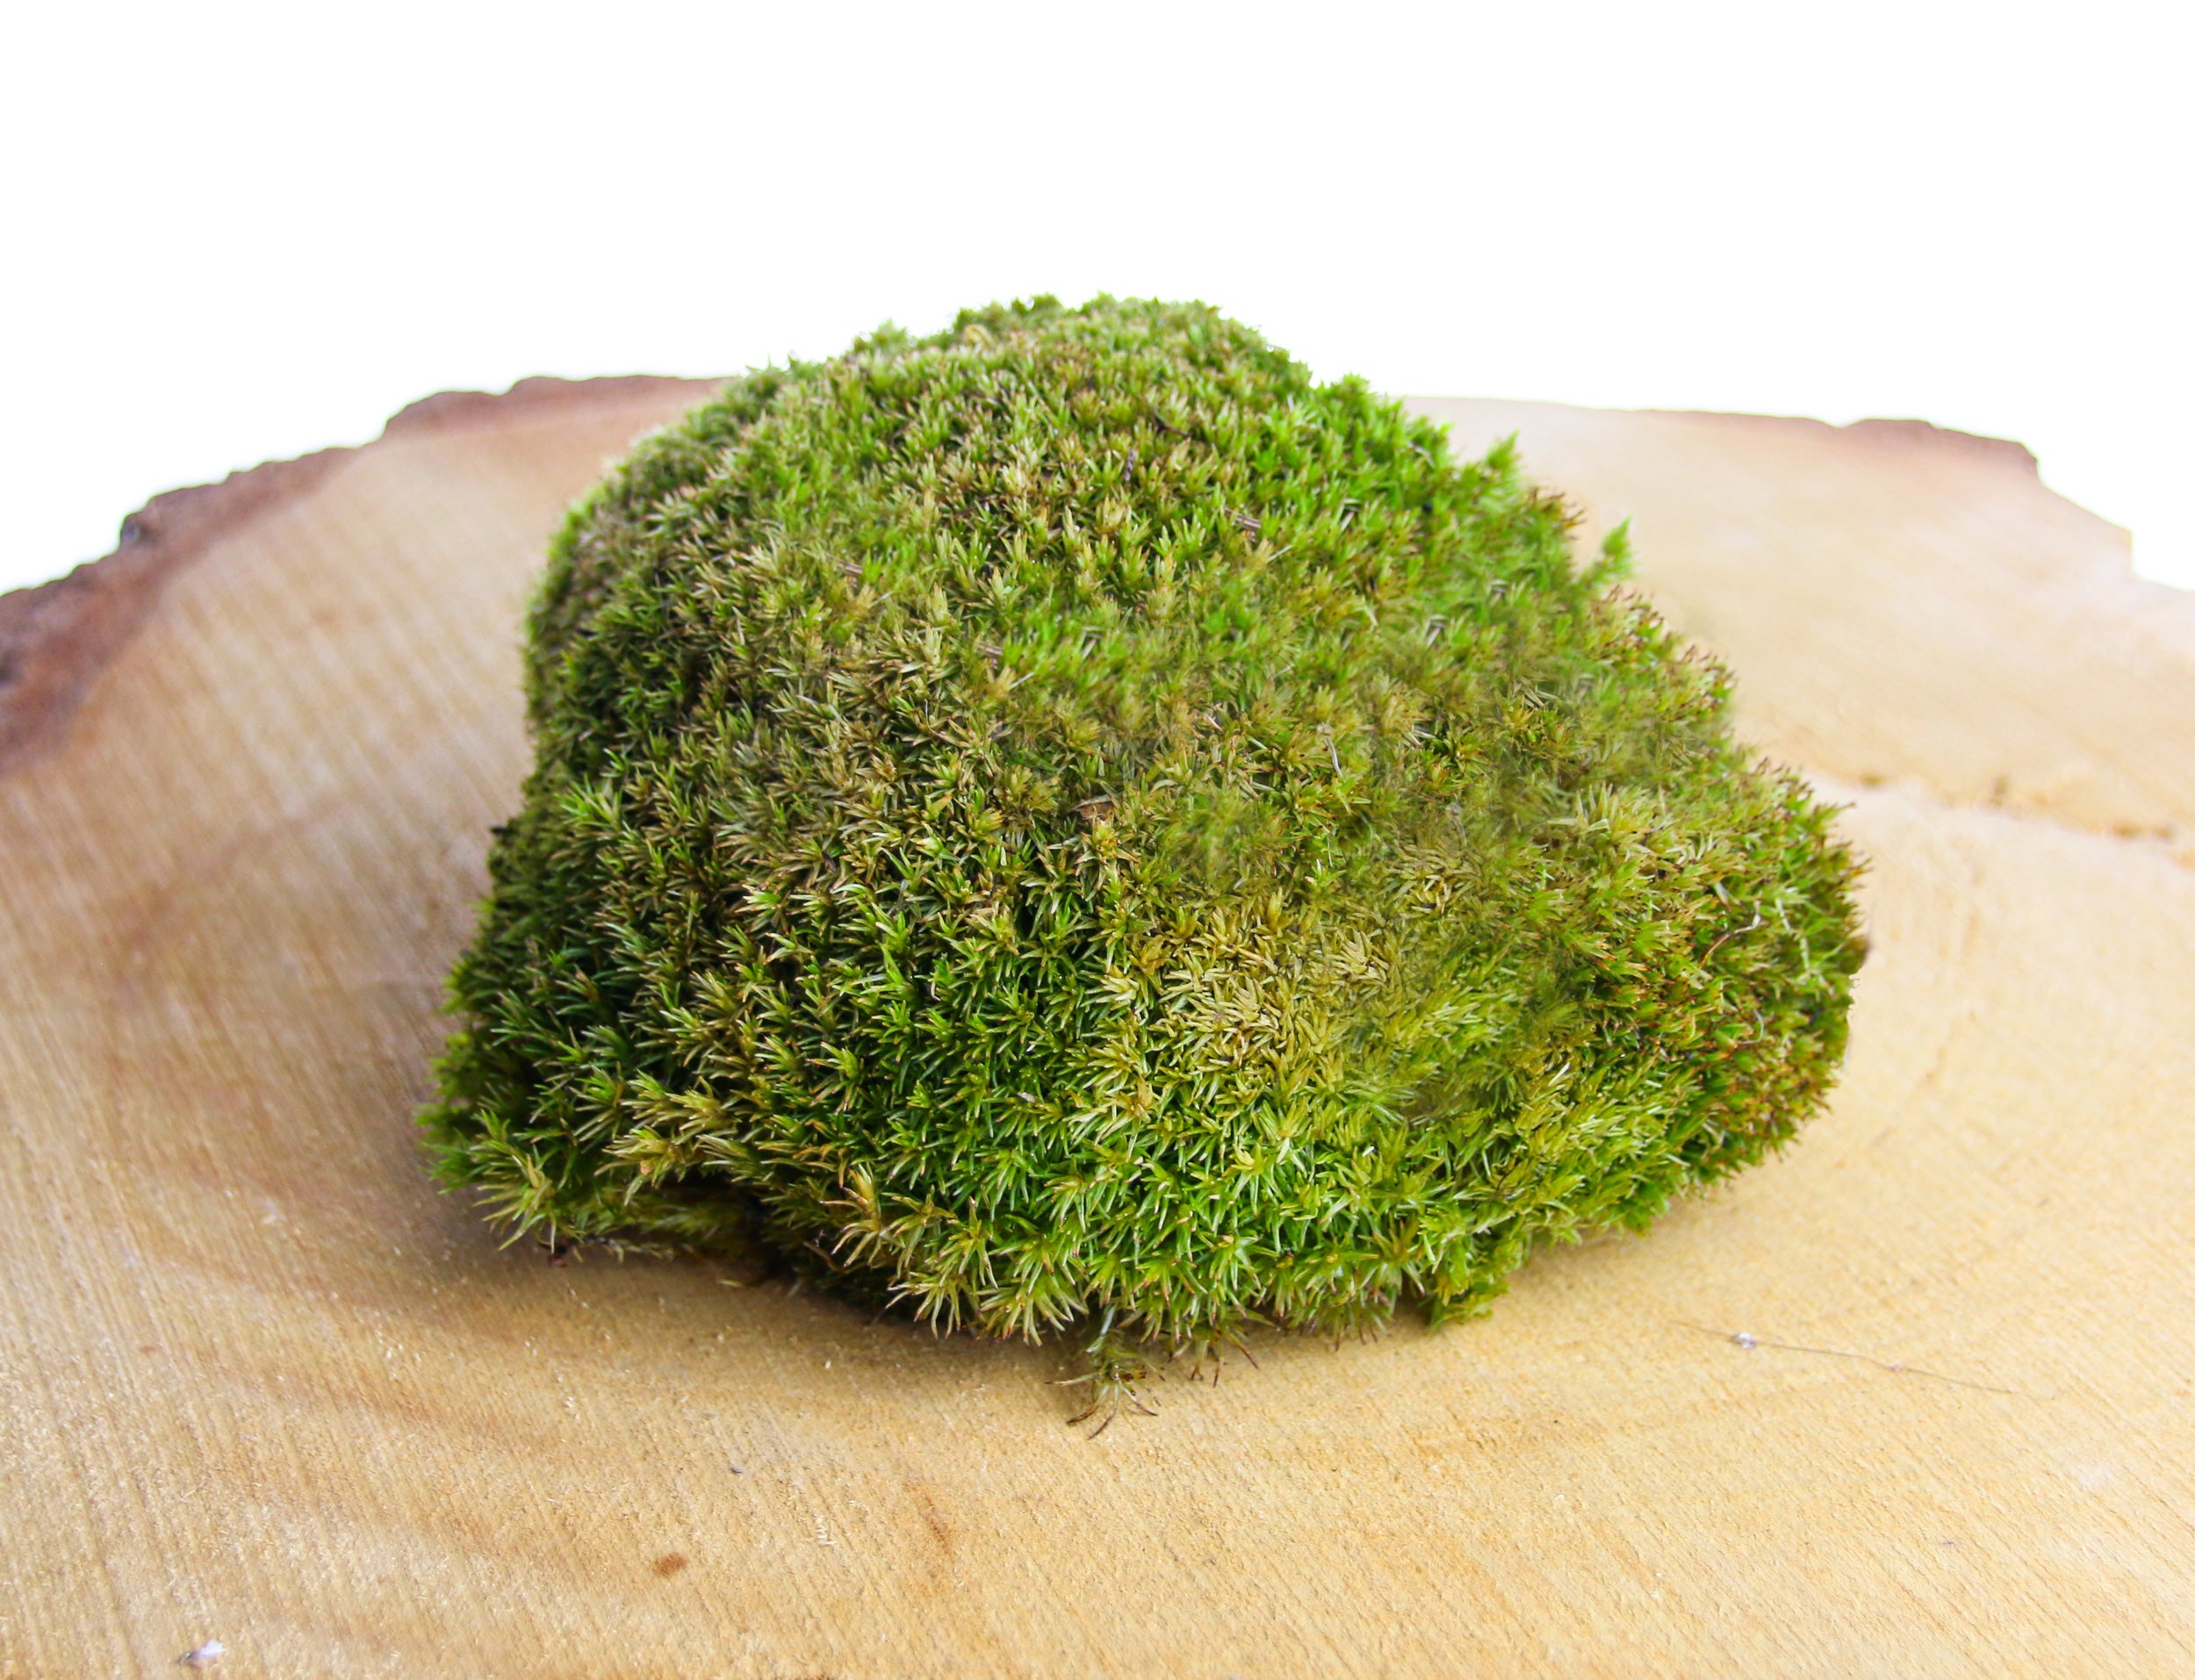 Buy living moss for a terrarium